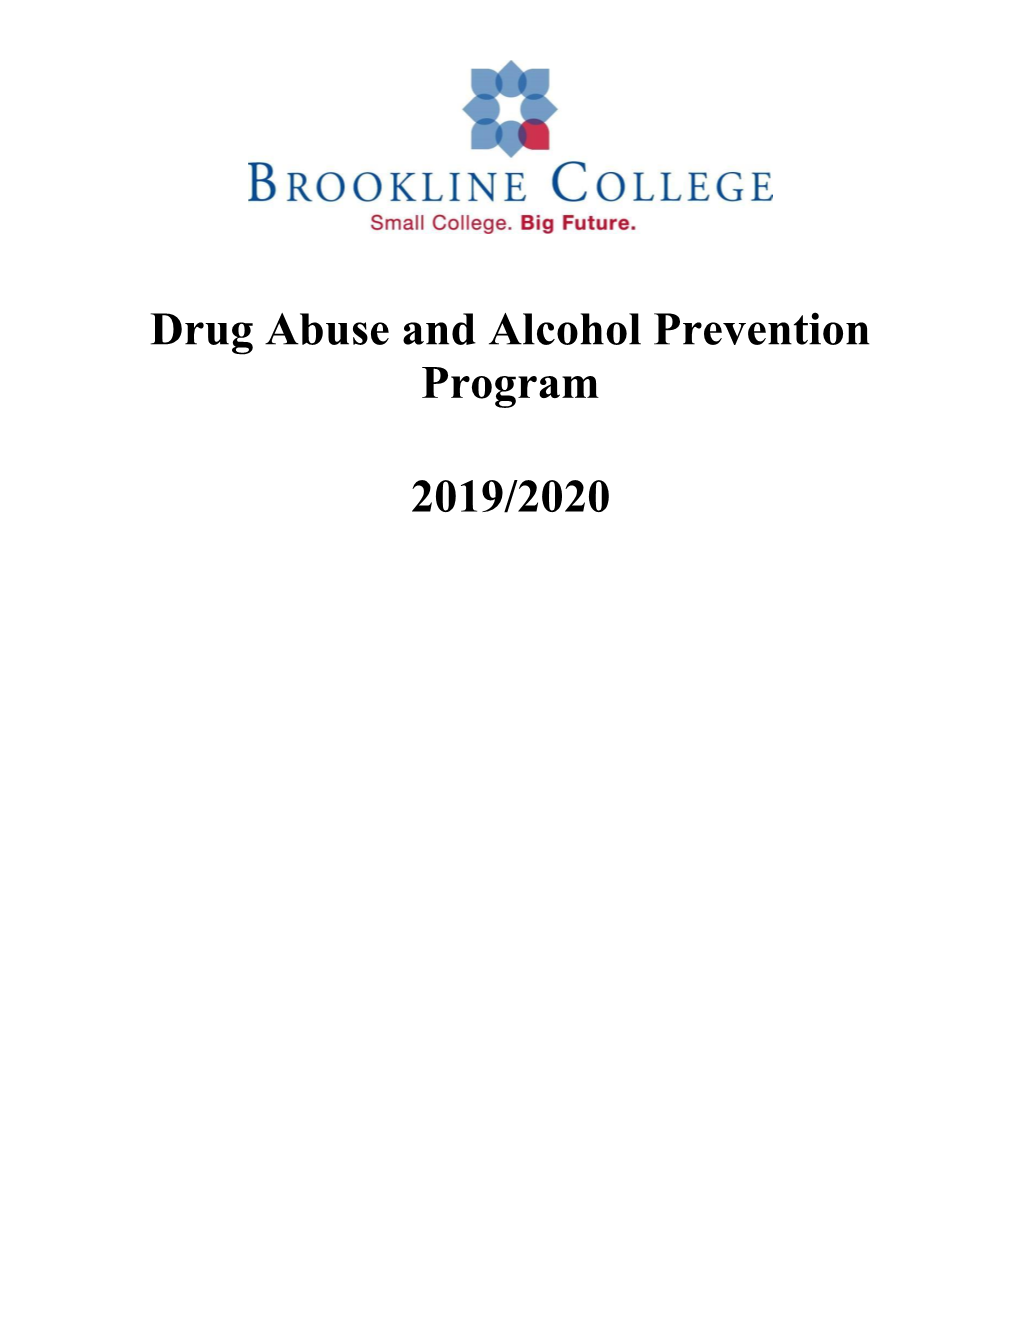 Drug Abuse and Alcohol Prevention Program 2019/2020